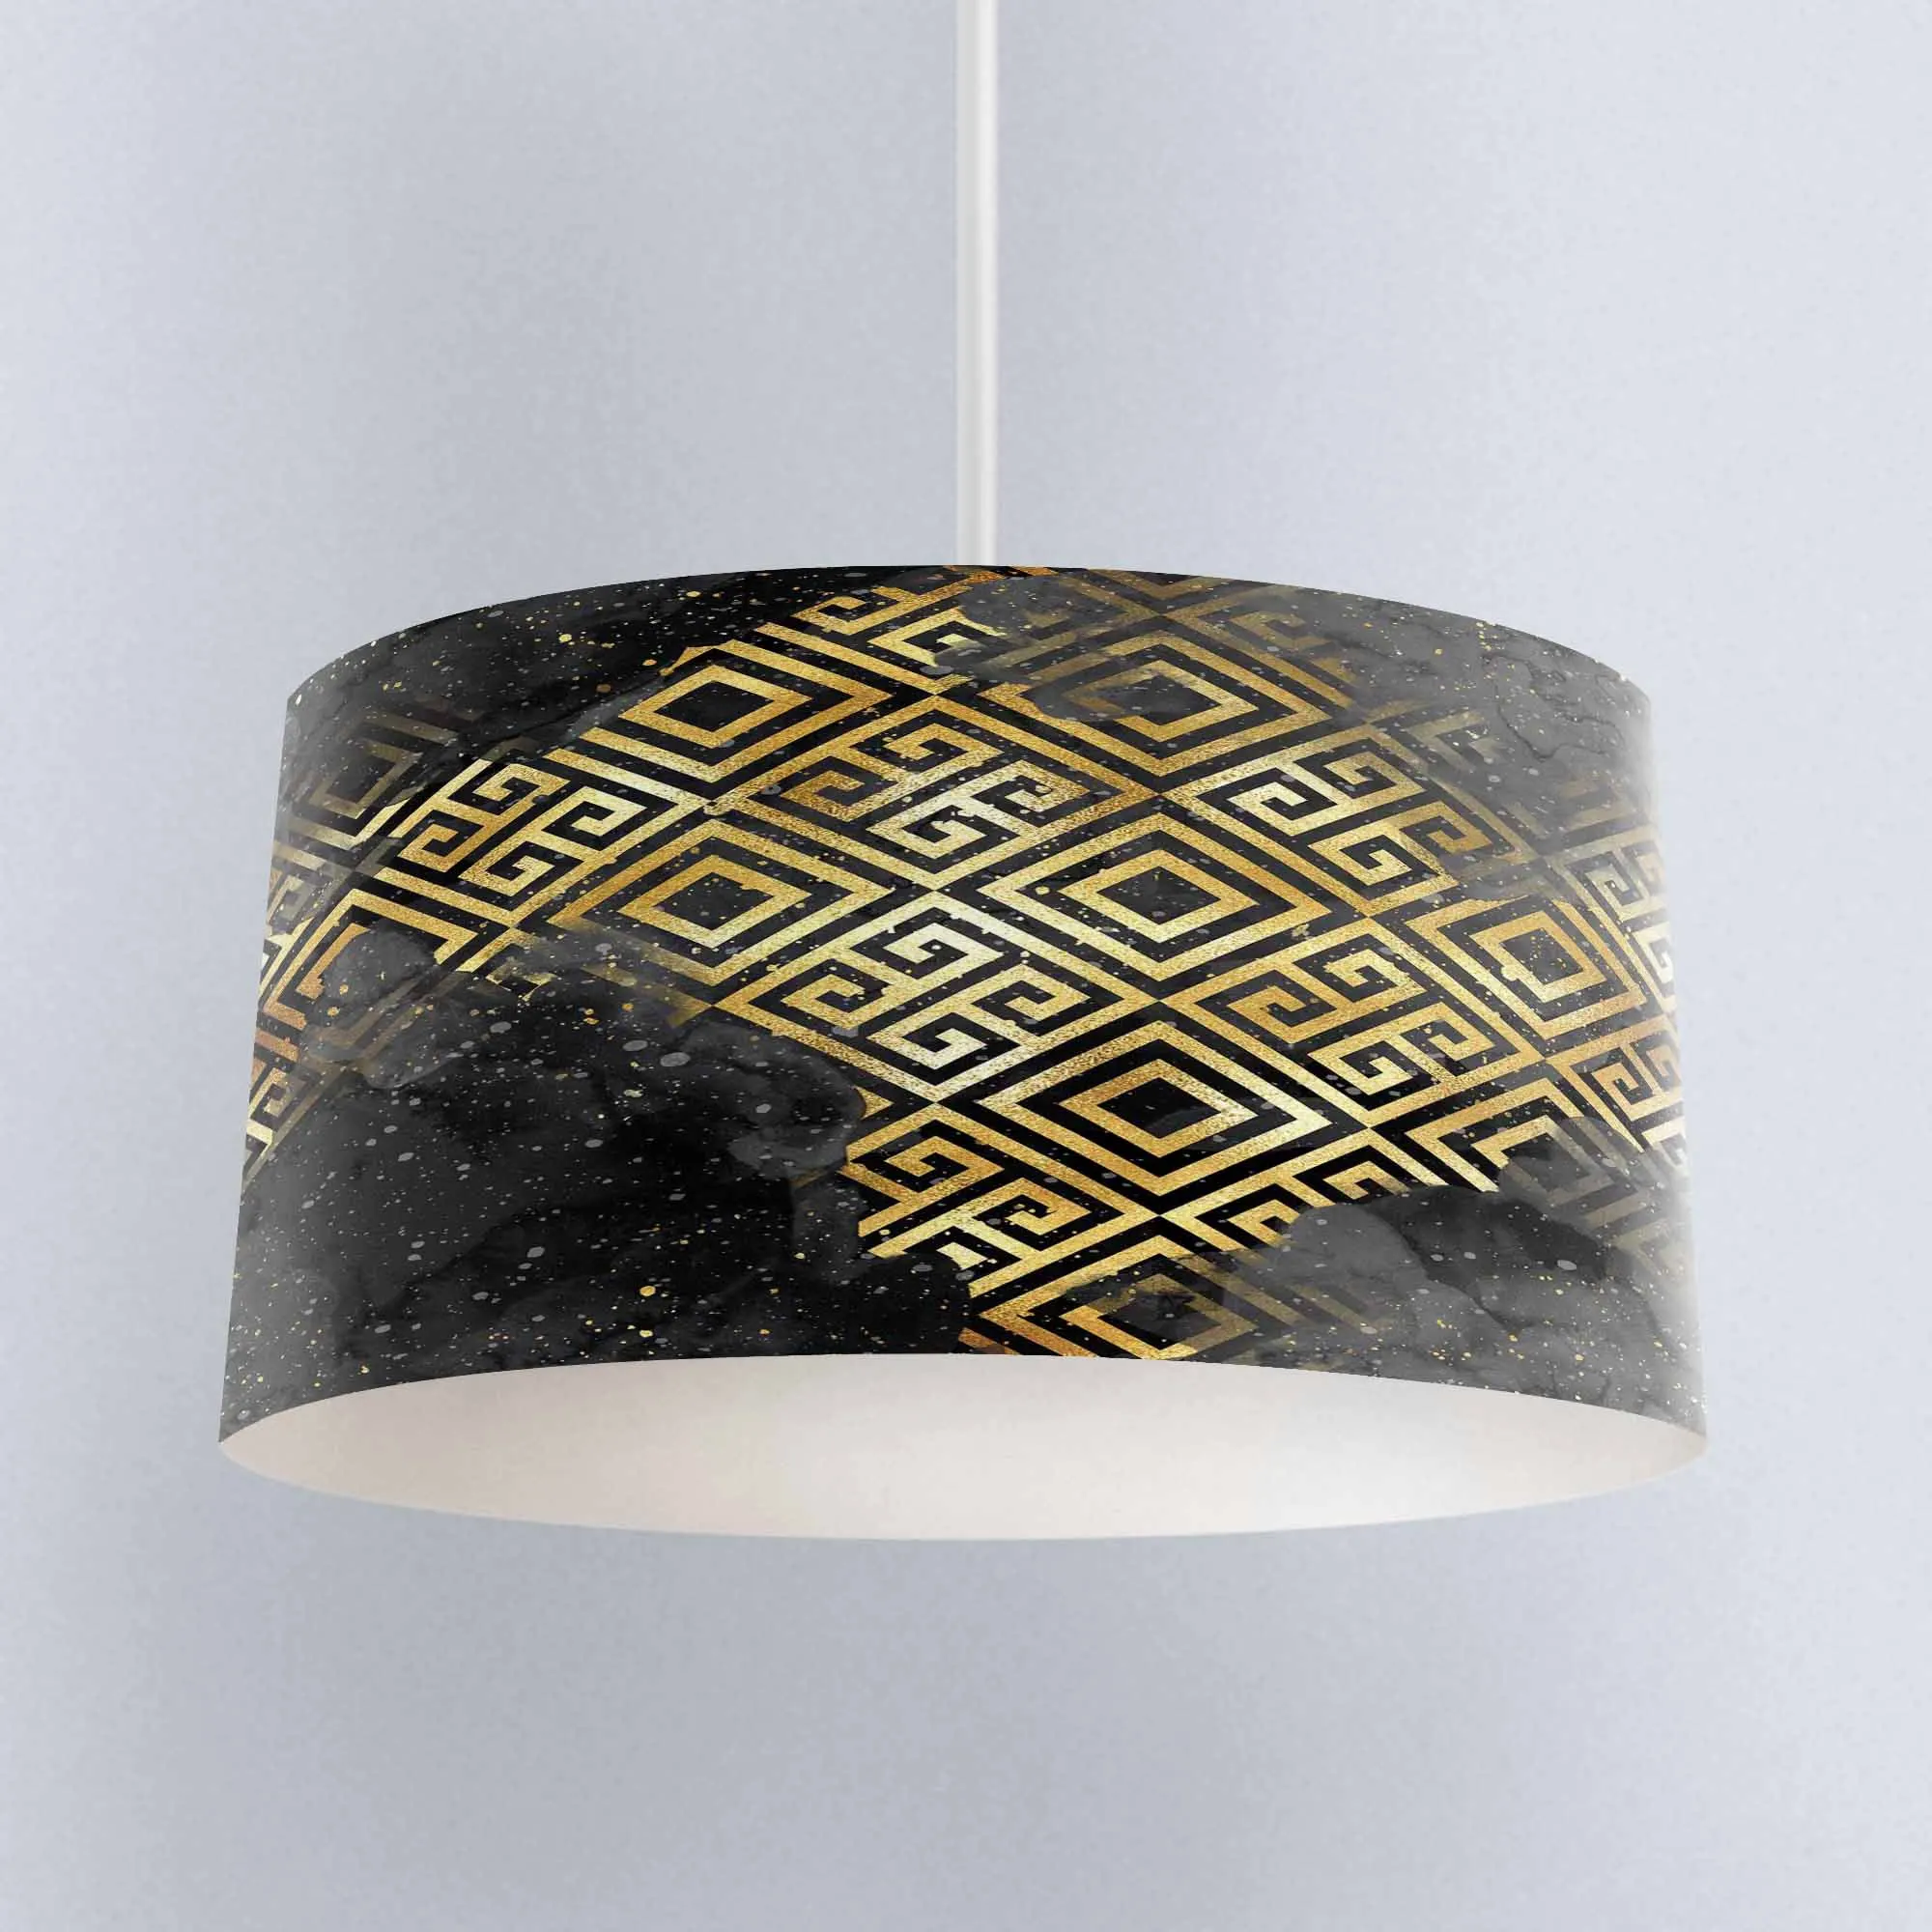 

Else Black Golden Yellow Ikat Locked Digital Printed Fabric Chandelier Lamp Drum Lampshade Floor Ceiling Pendant Light Shade